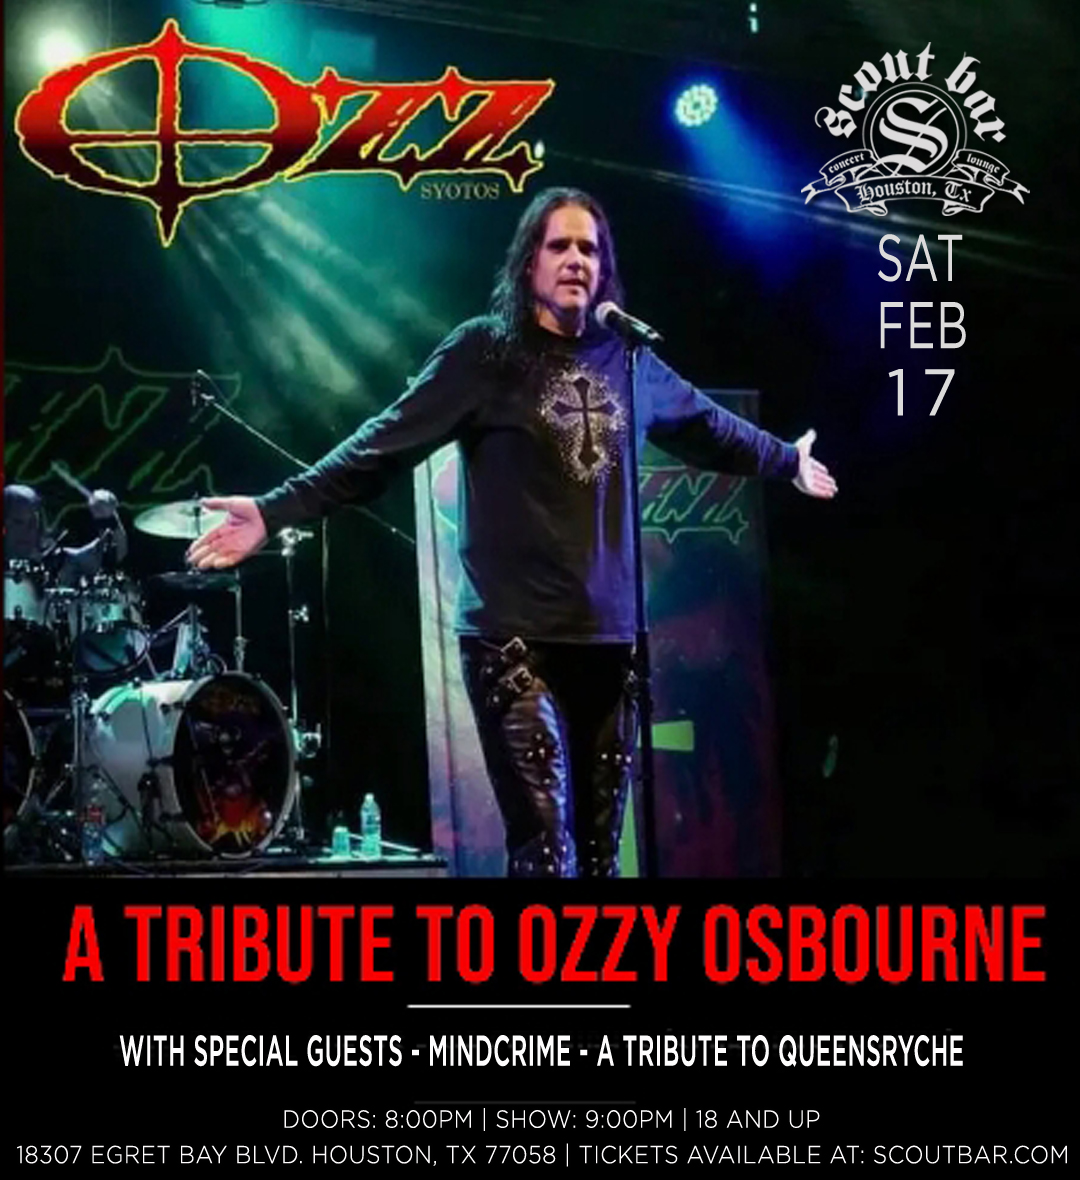 Buy tickets to OZZ a tribute to Ozzy Osbourne in Houston on February